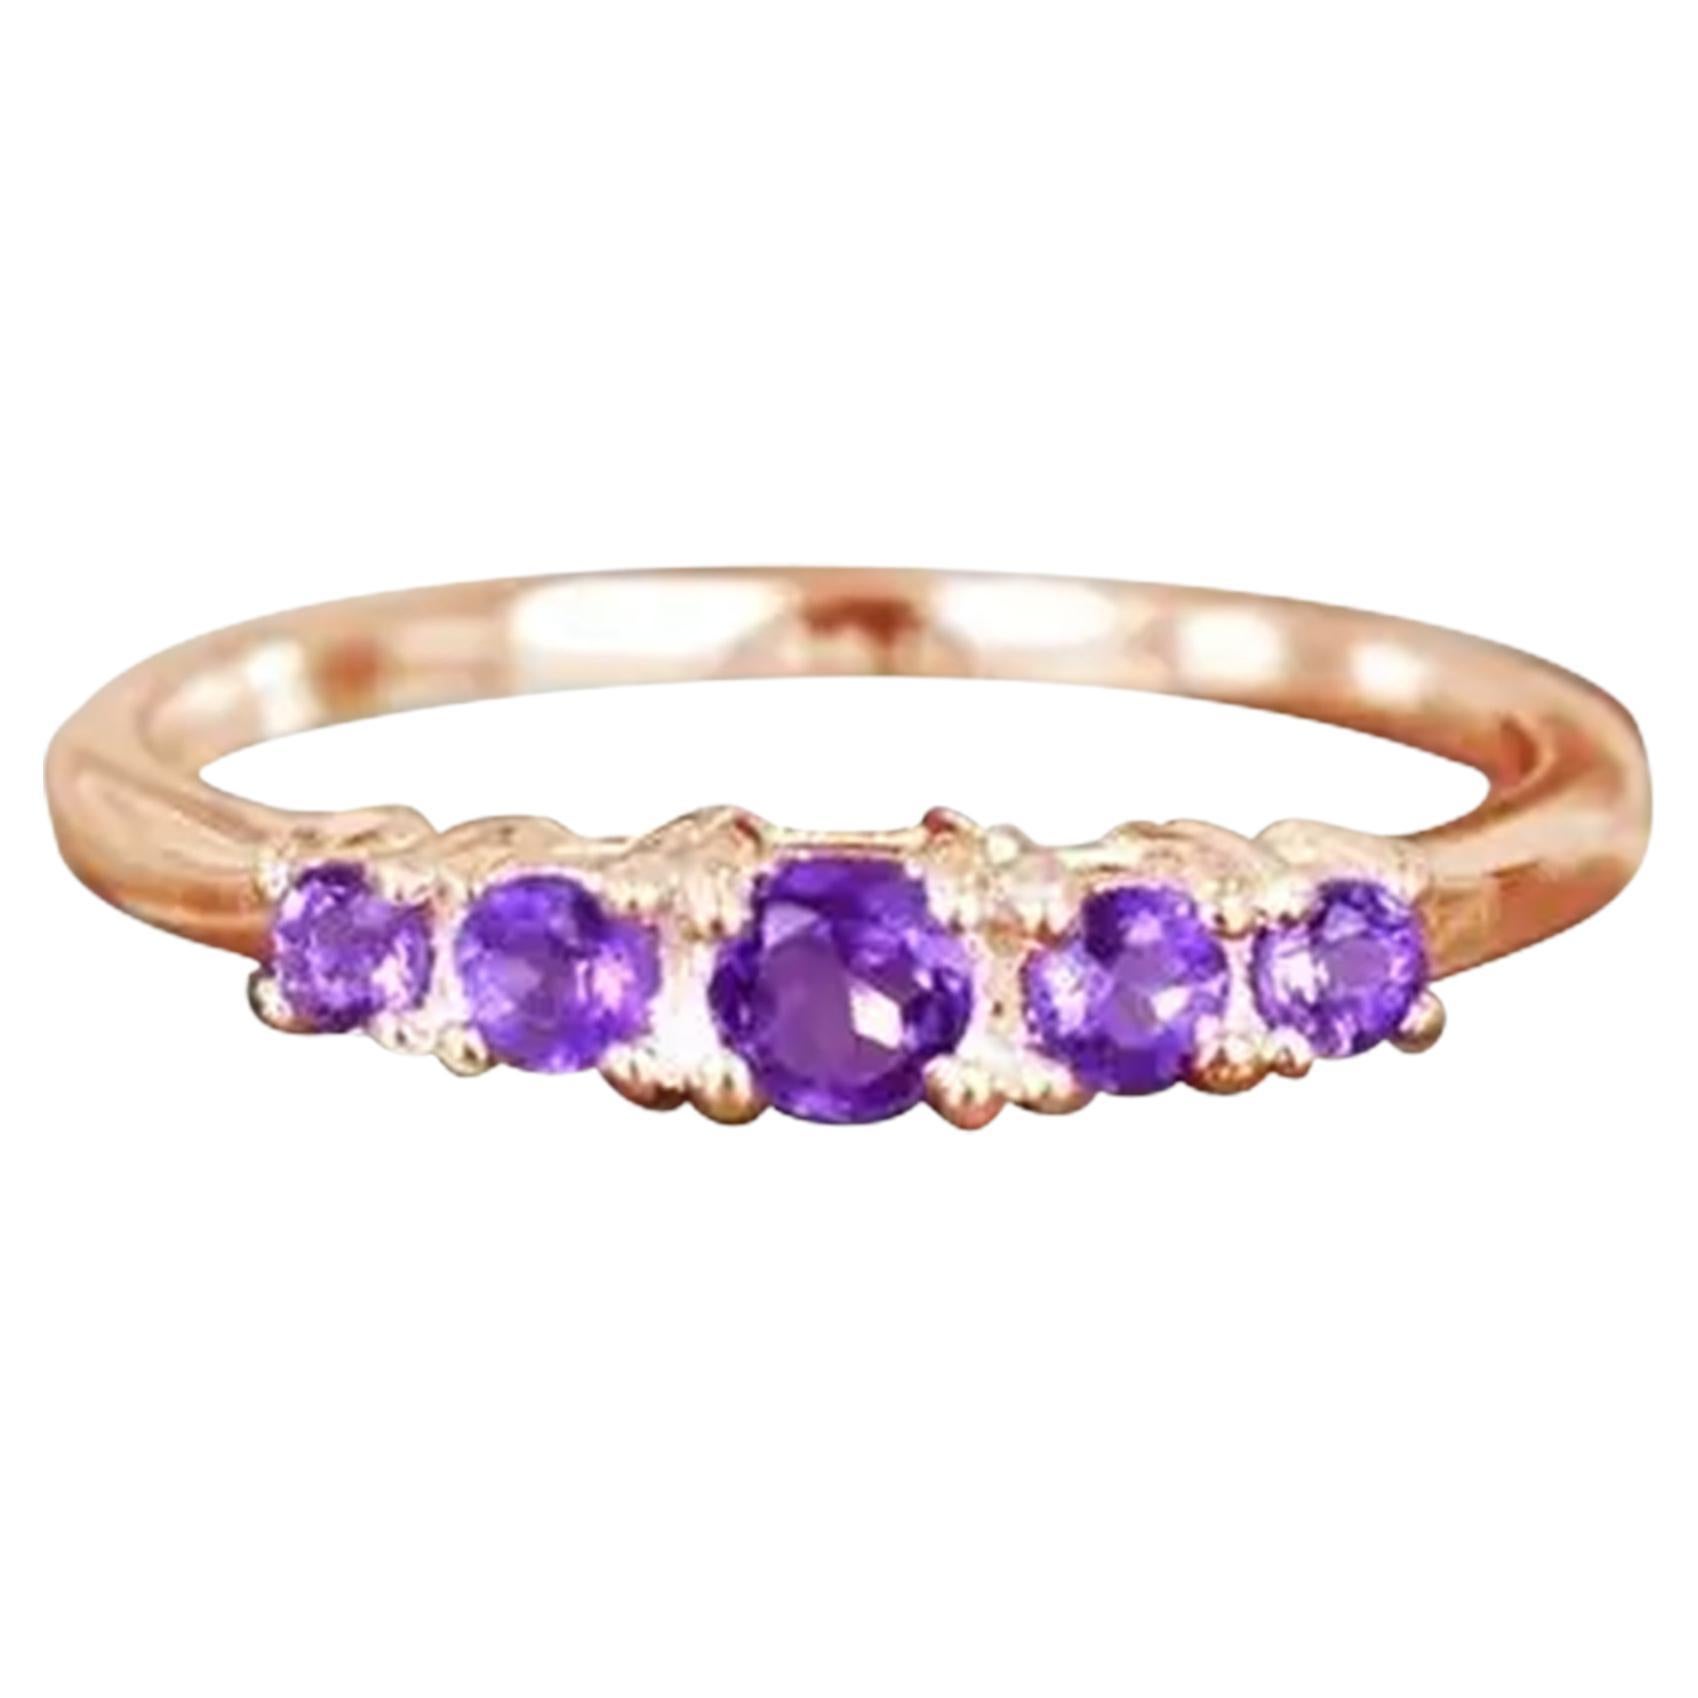 For Sale:  10k Gold Multiple Gemstone Ring Birthstone Ring